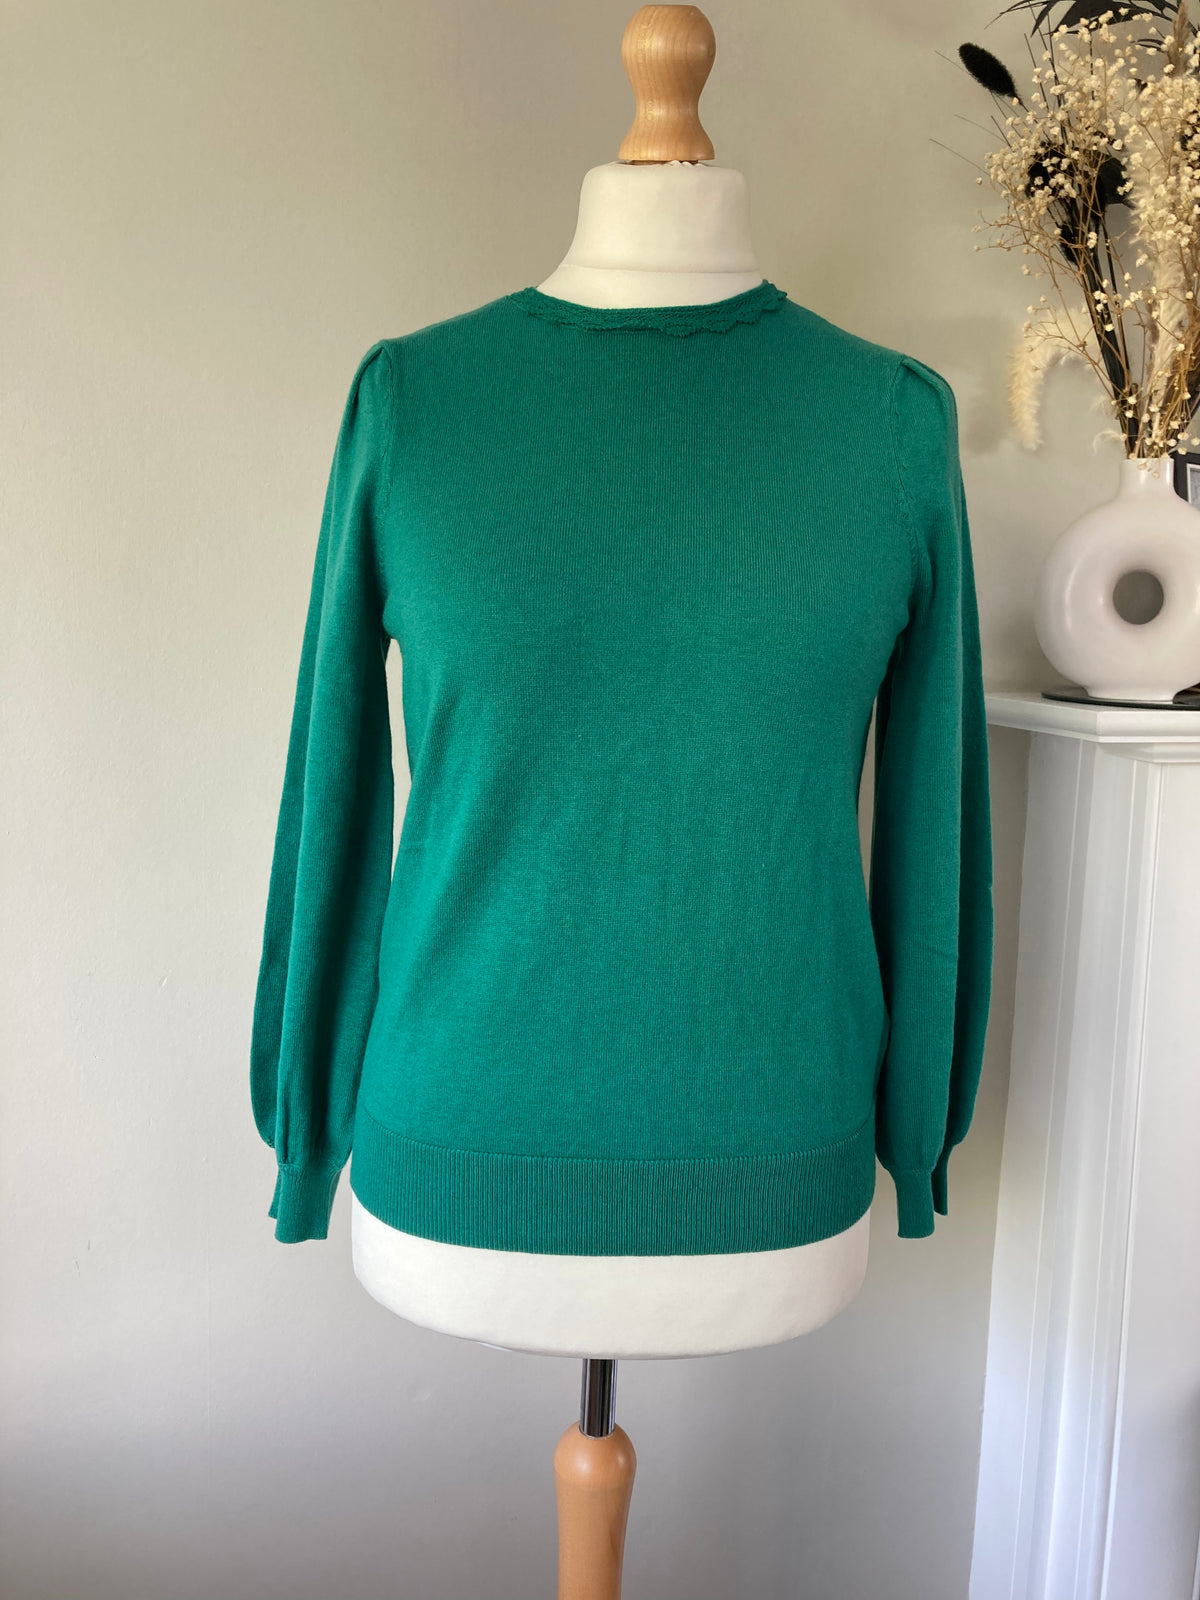 Green lace collard jumper by TESINI - Size 12